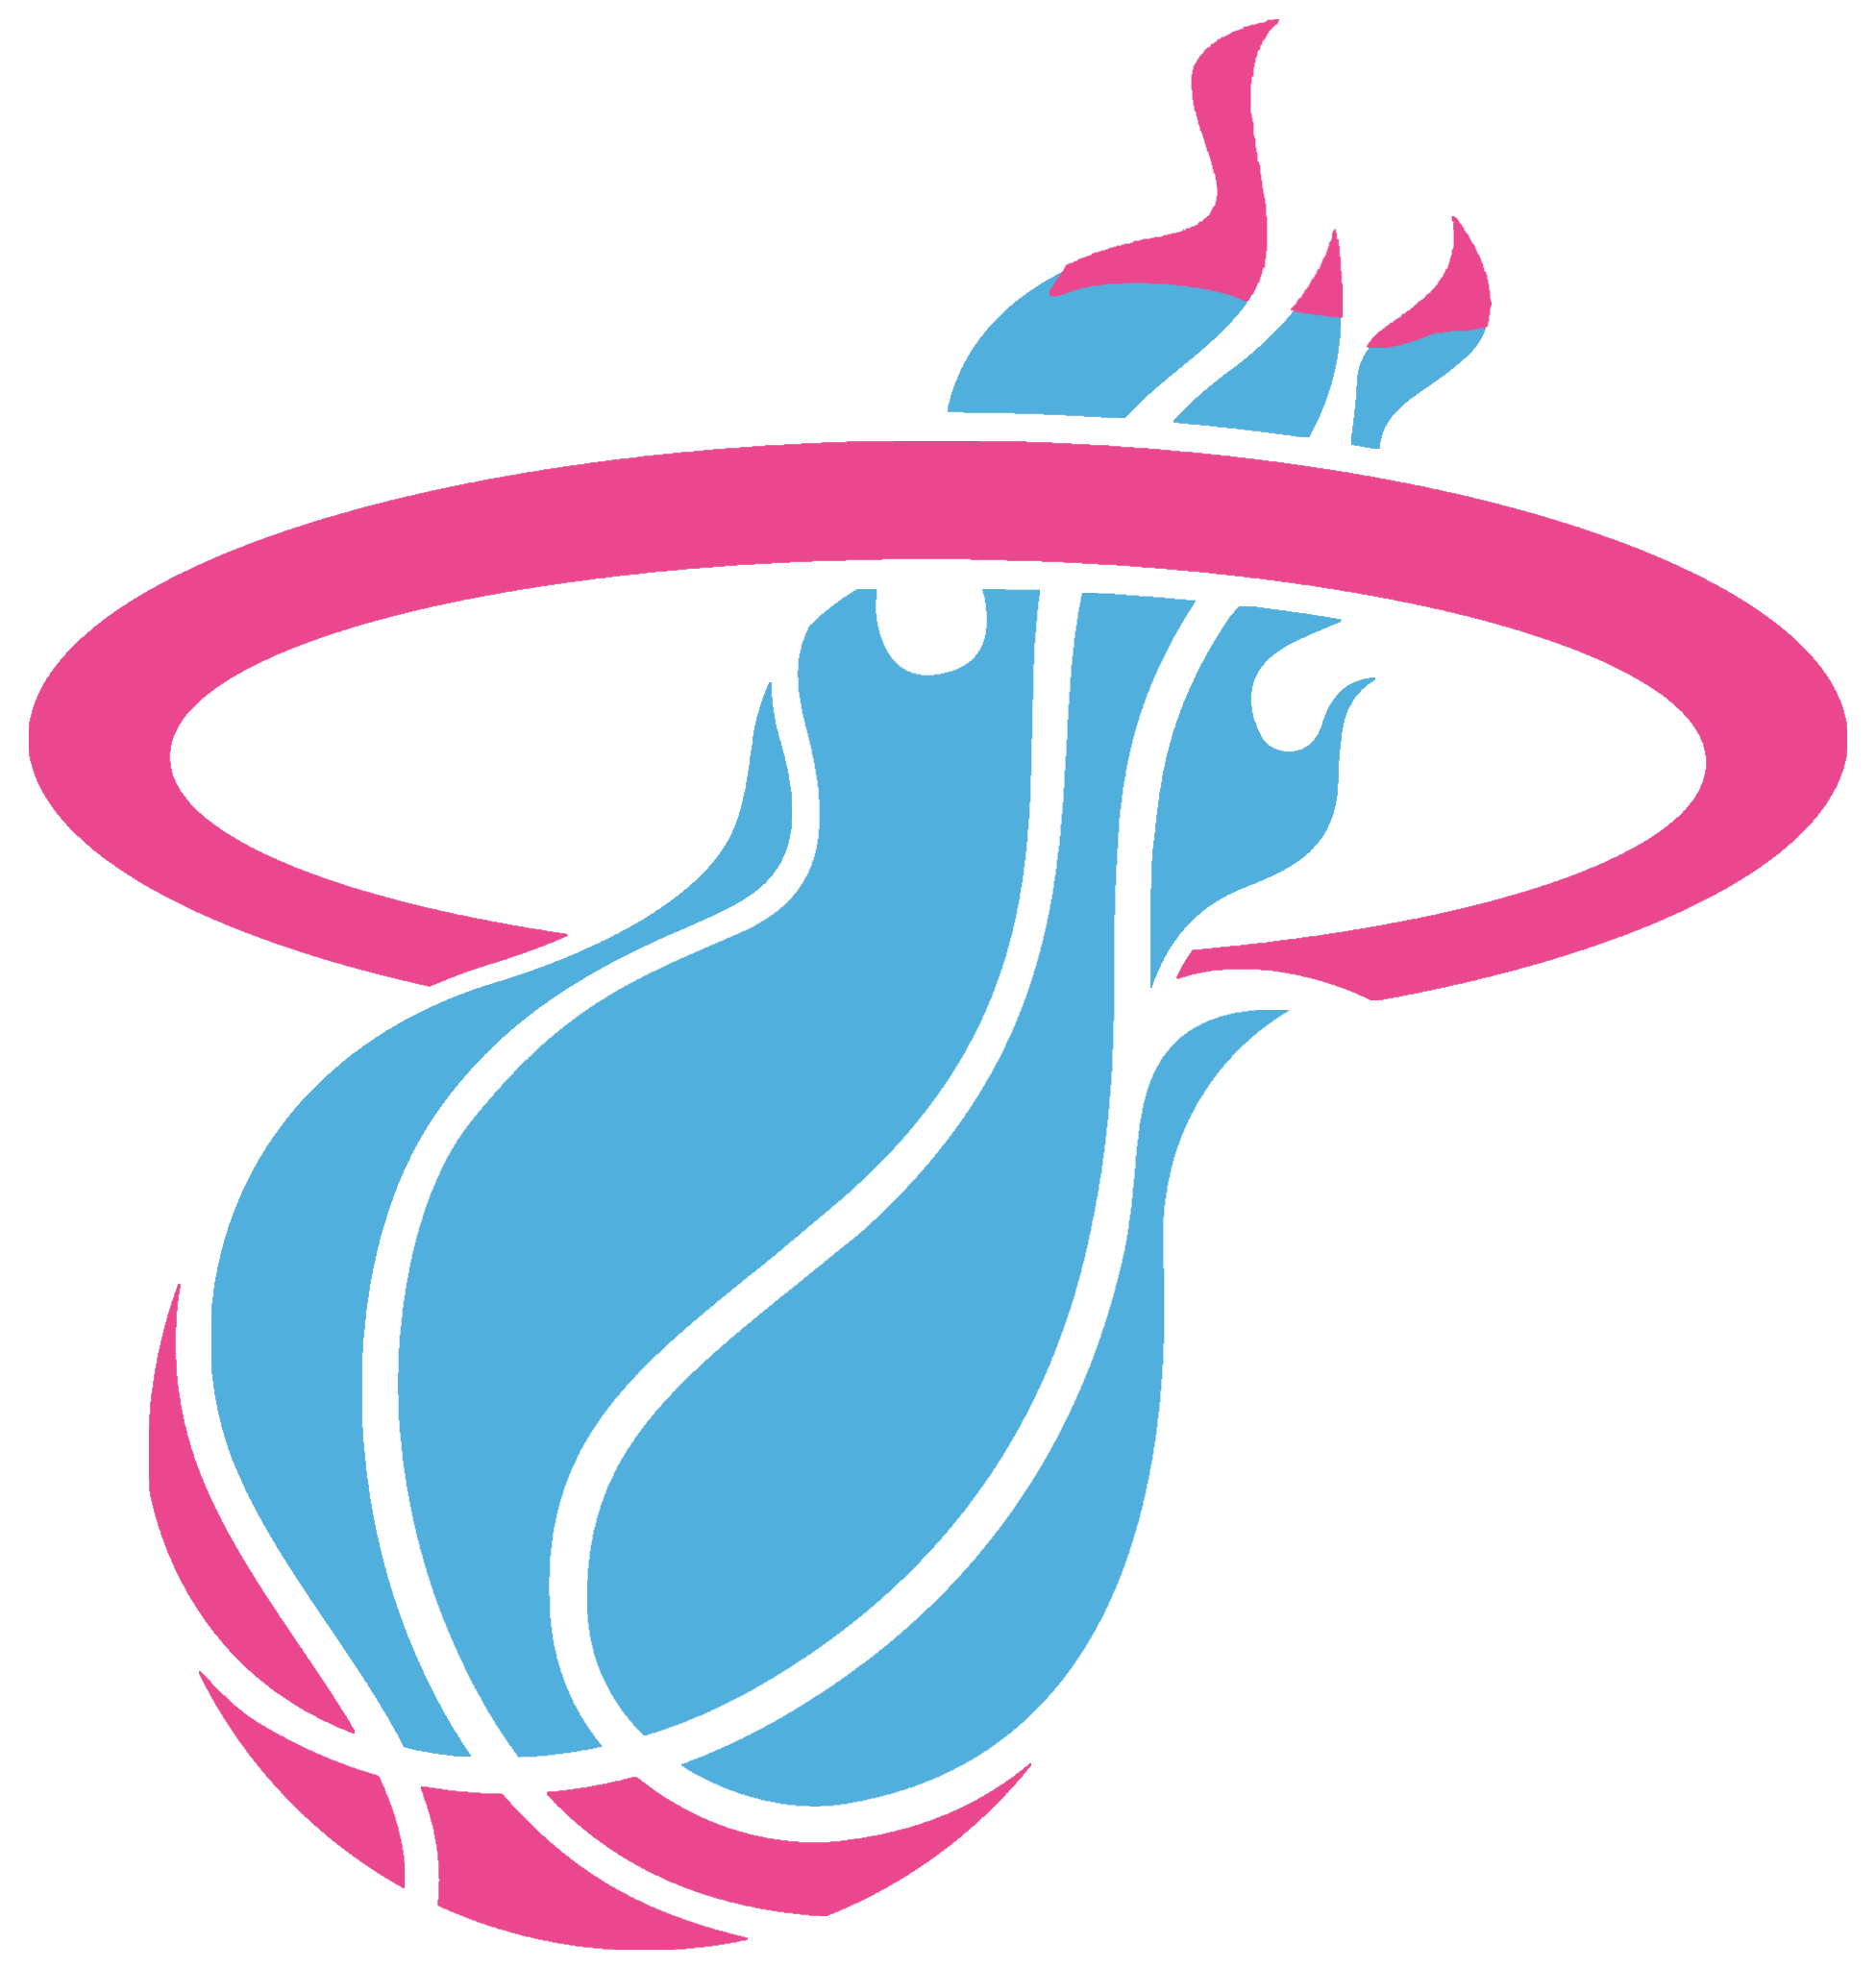 Miami Heat - Vice Nights - Alternate Logo by ragerakizta on DeviantArt